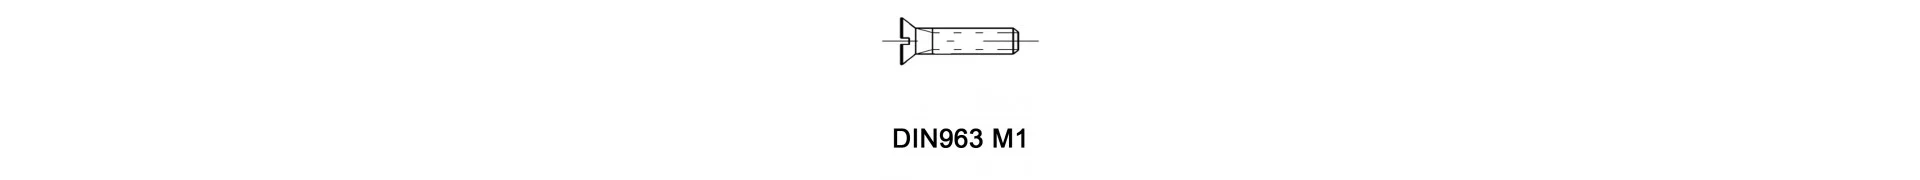 DIN963 M1